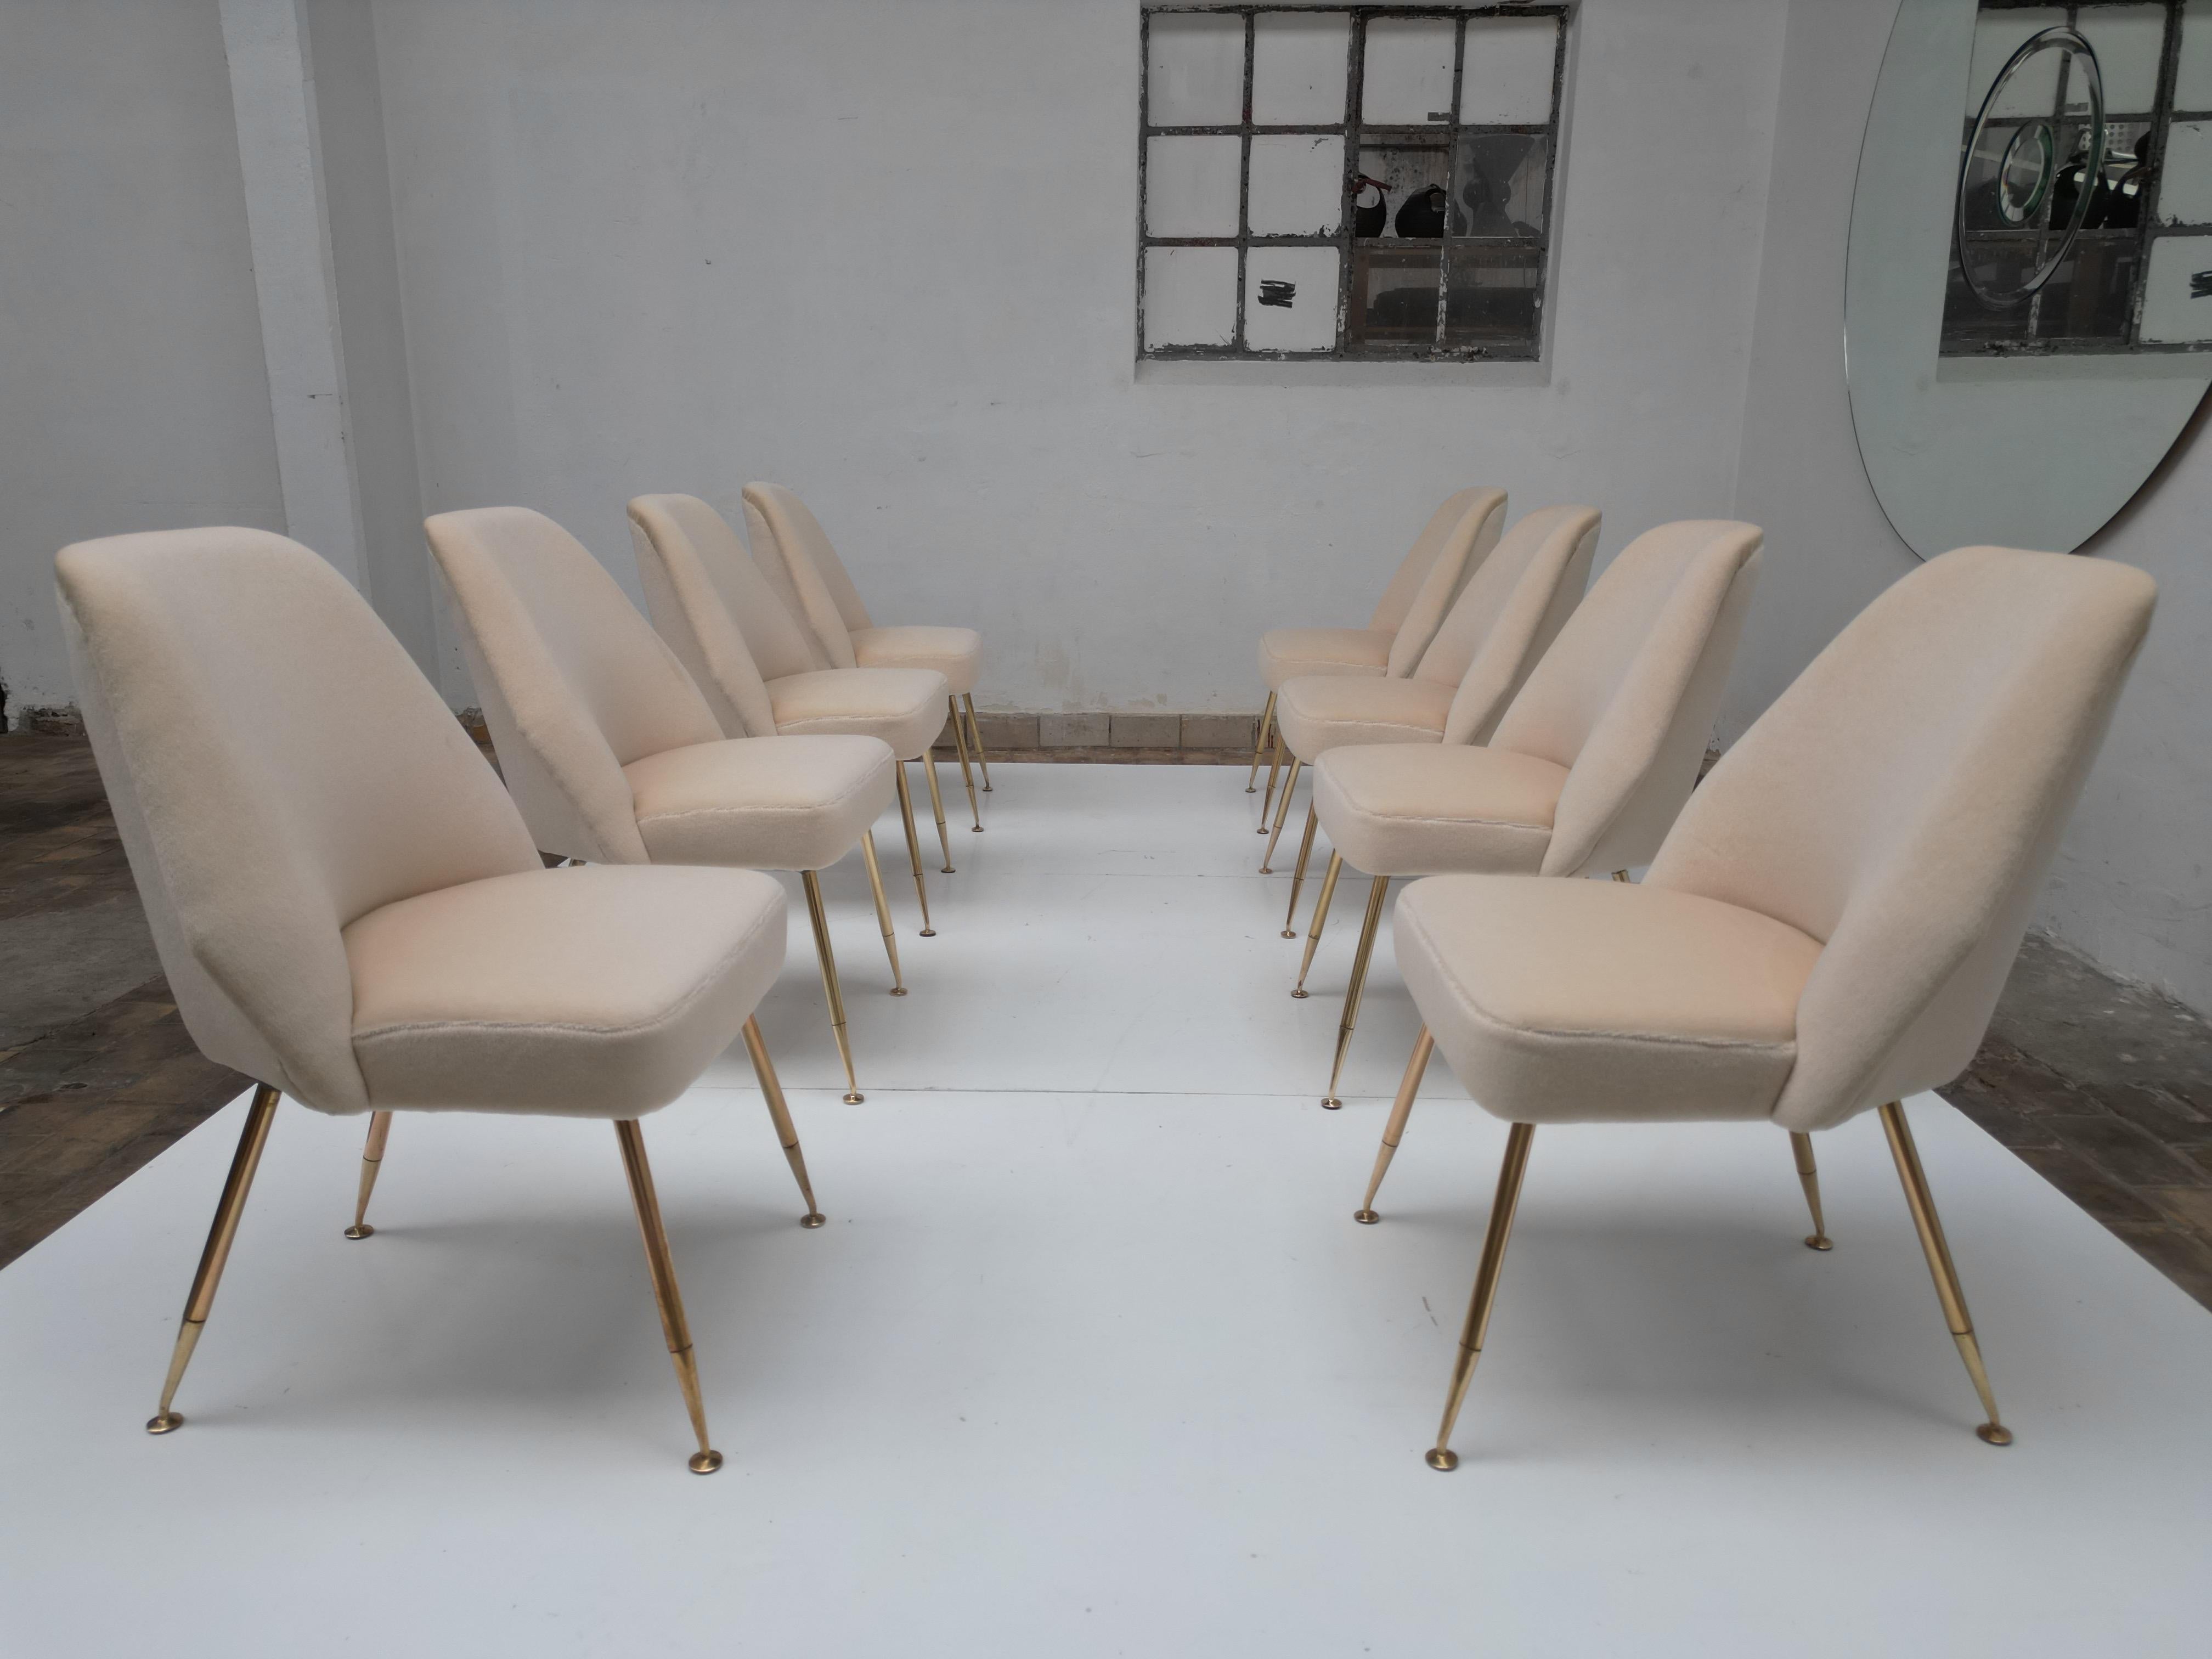 8 Brass Leg Chairs by Pagani, Partner of Gio Ponti & Lina Bo Bardi, 1952, Arflex 2